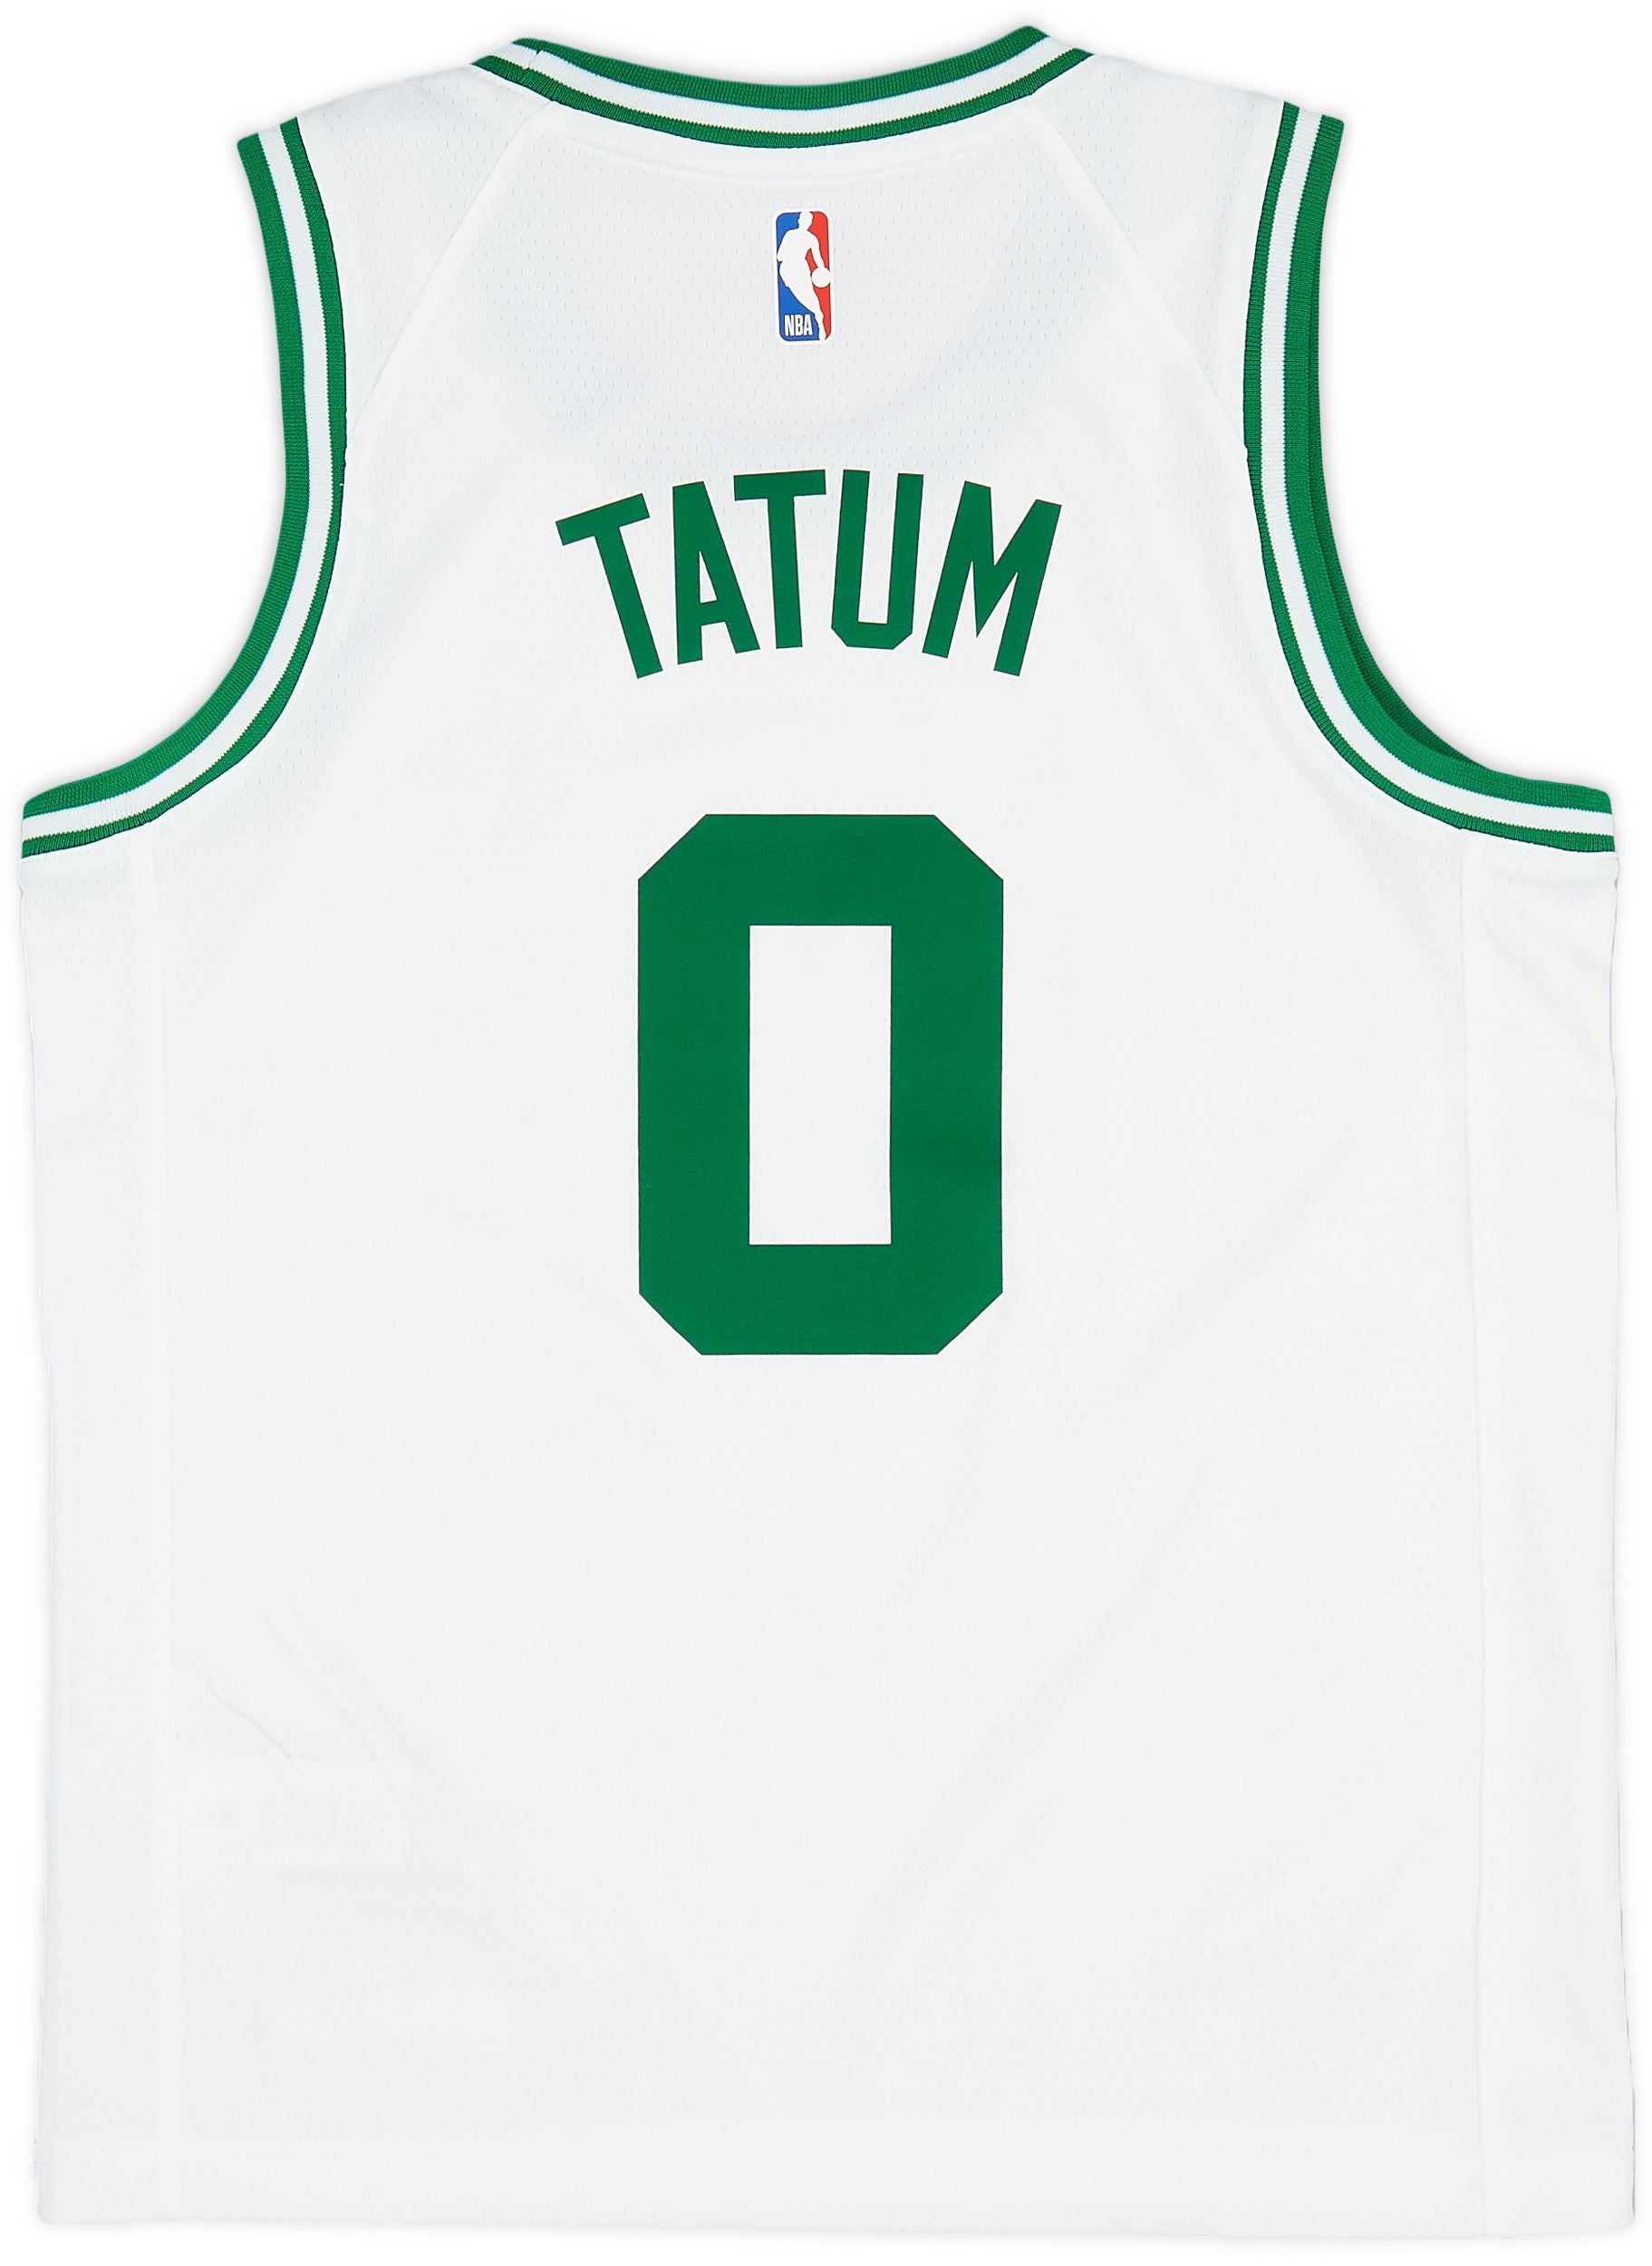 Boston Celtics Home Uniform  Boston celtics, Boston celtics logo, Boston  celtics basketball